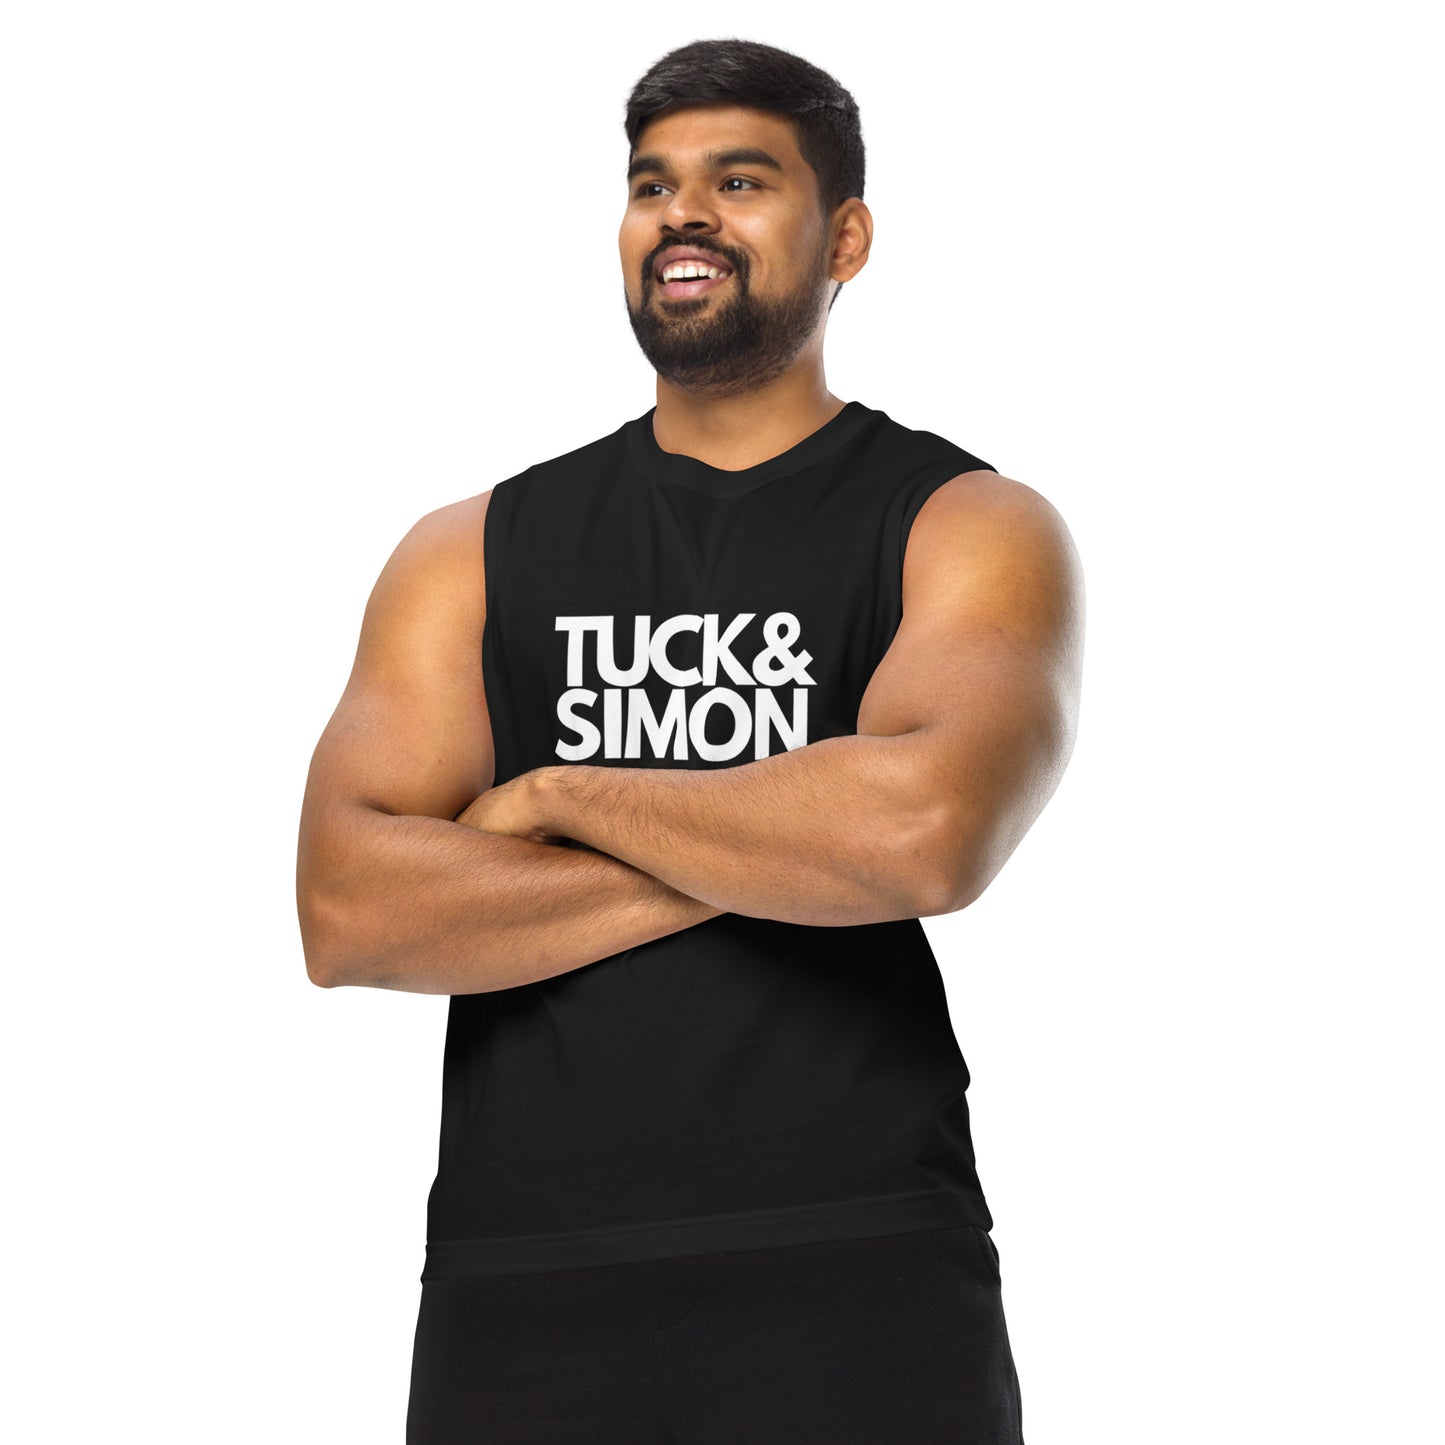 Tuck&Simon Black Muscle Shirt